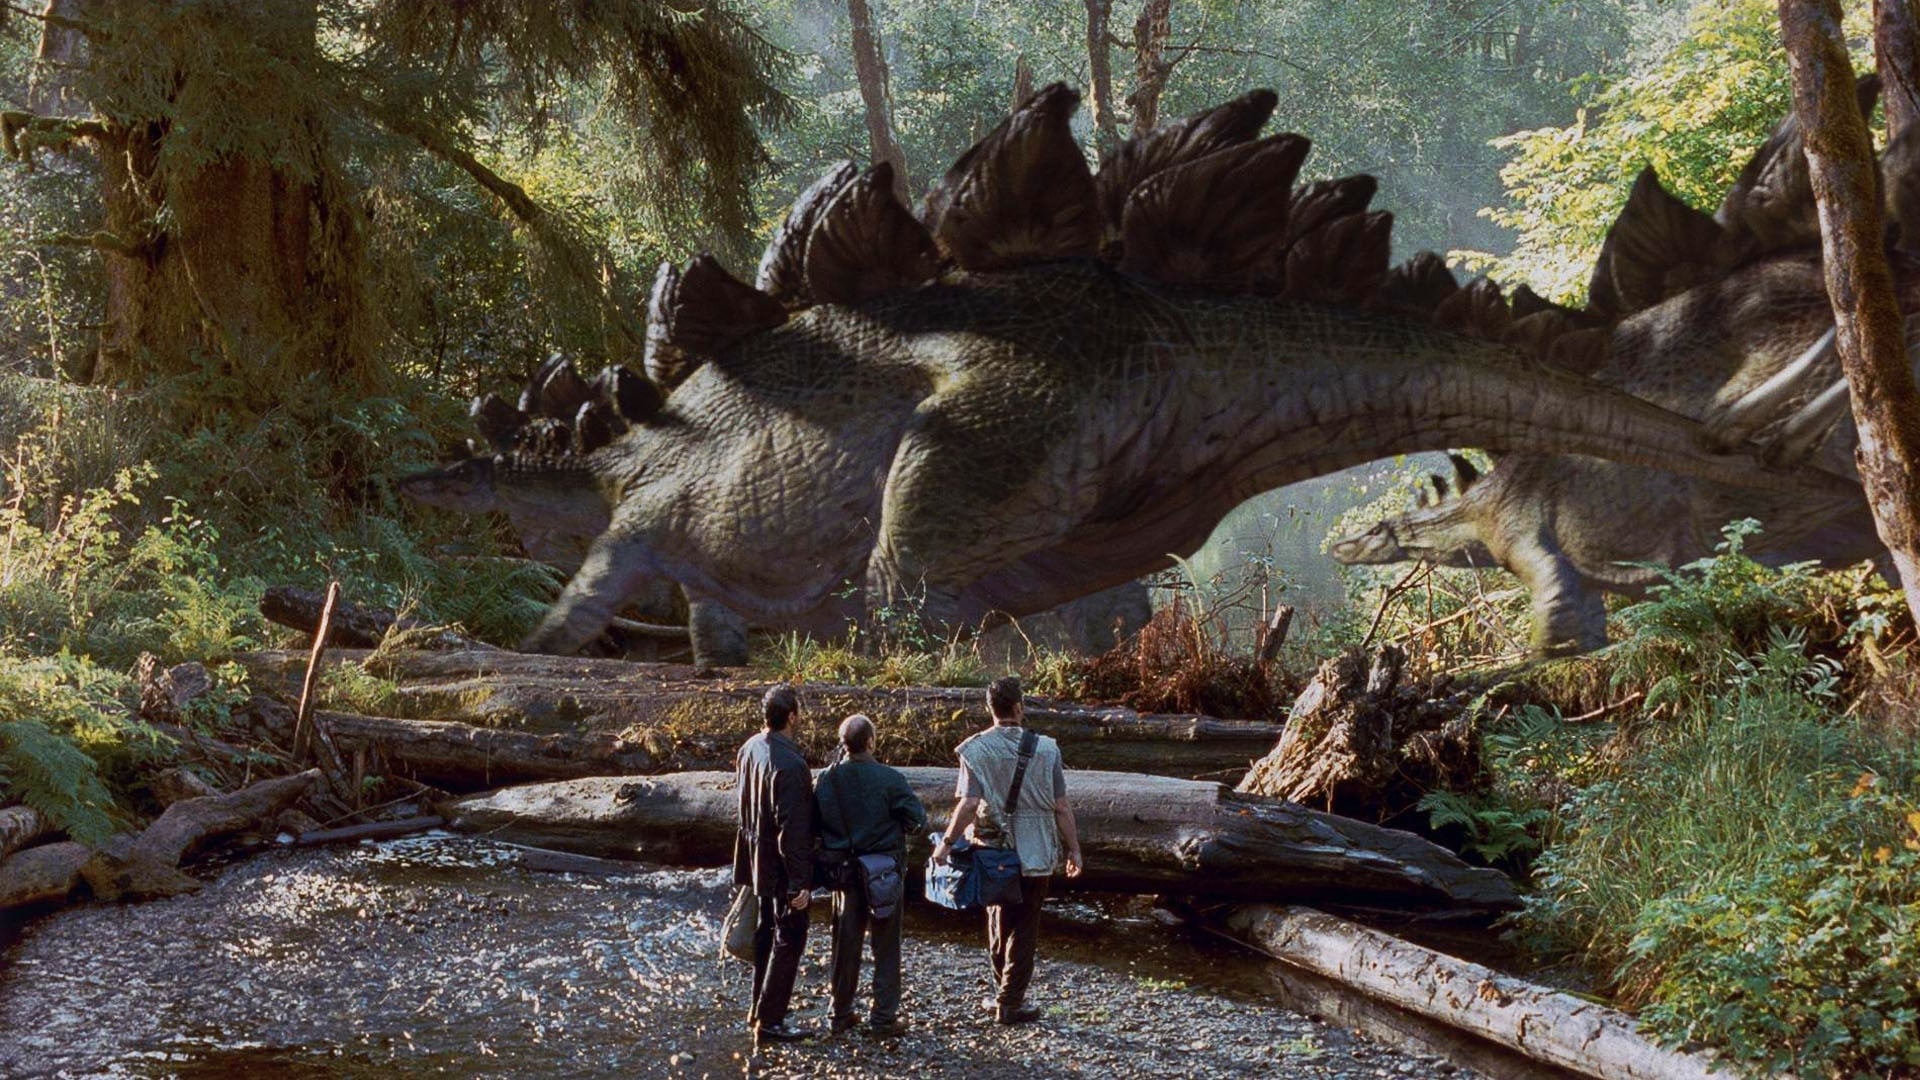 Jurassic Park The Lost World ใครว่ามันสูญพันธุ์